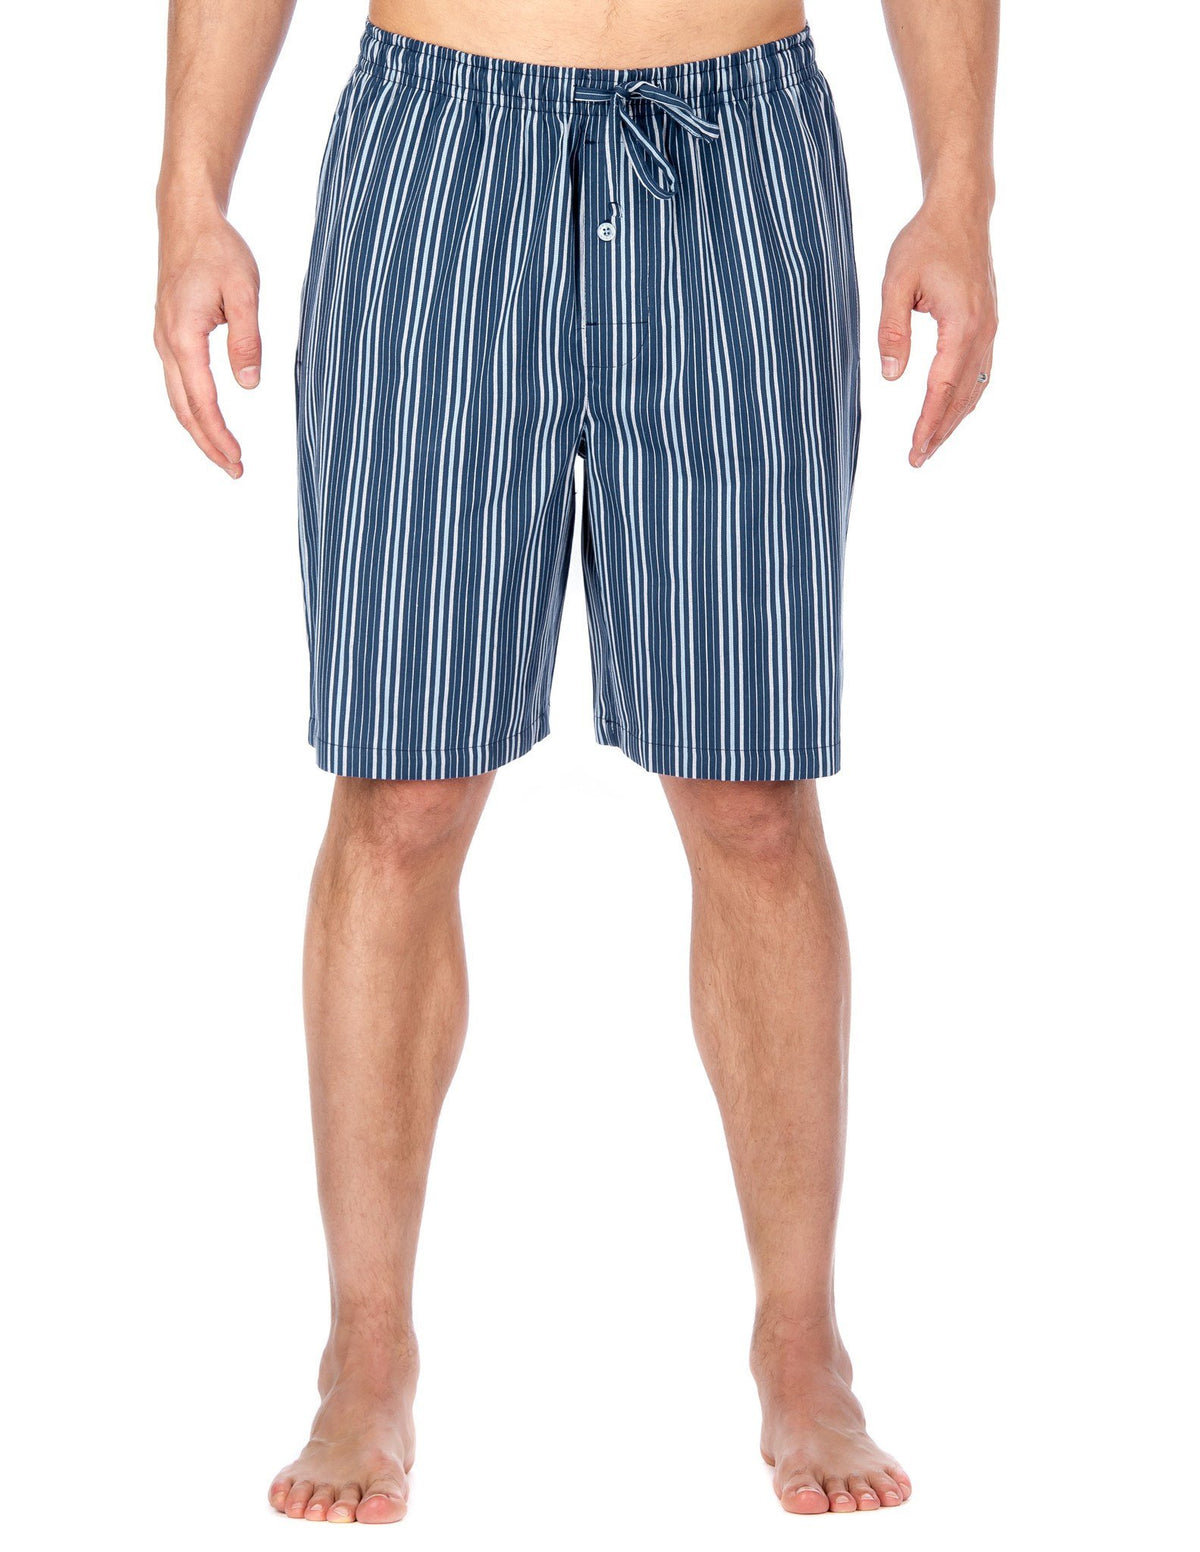 Men's Premium Cotton Lounge/Sleep Shorts - Stripes Dark Blue